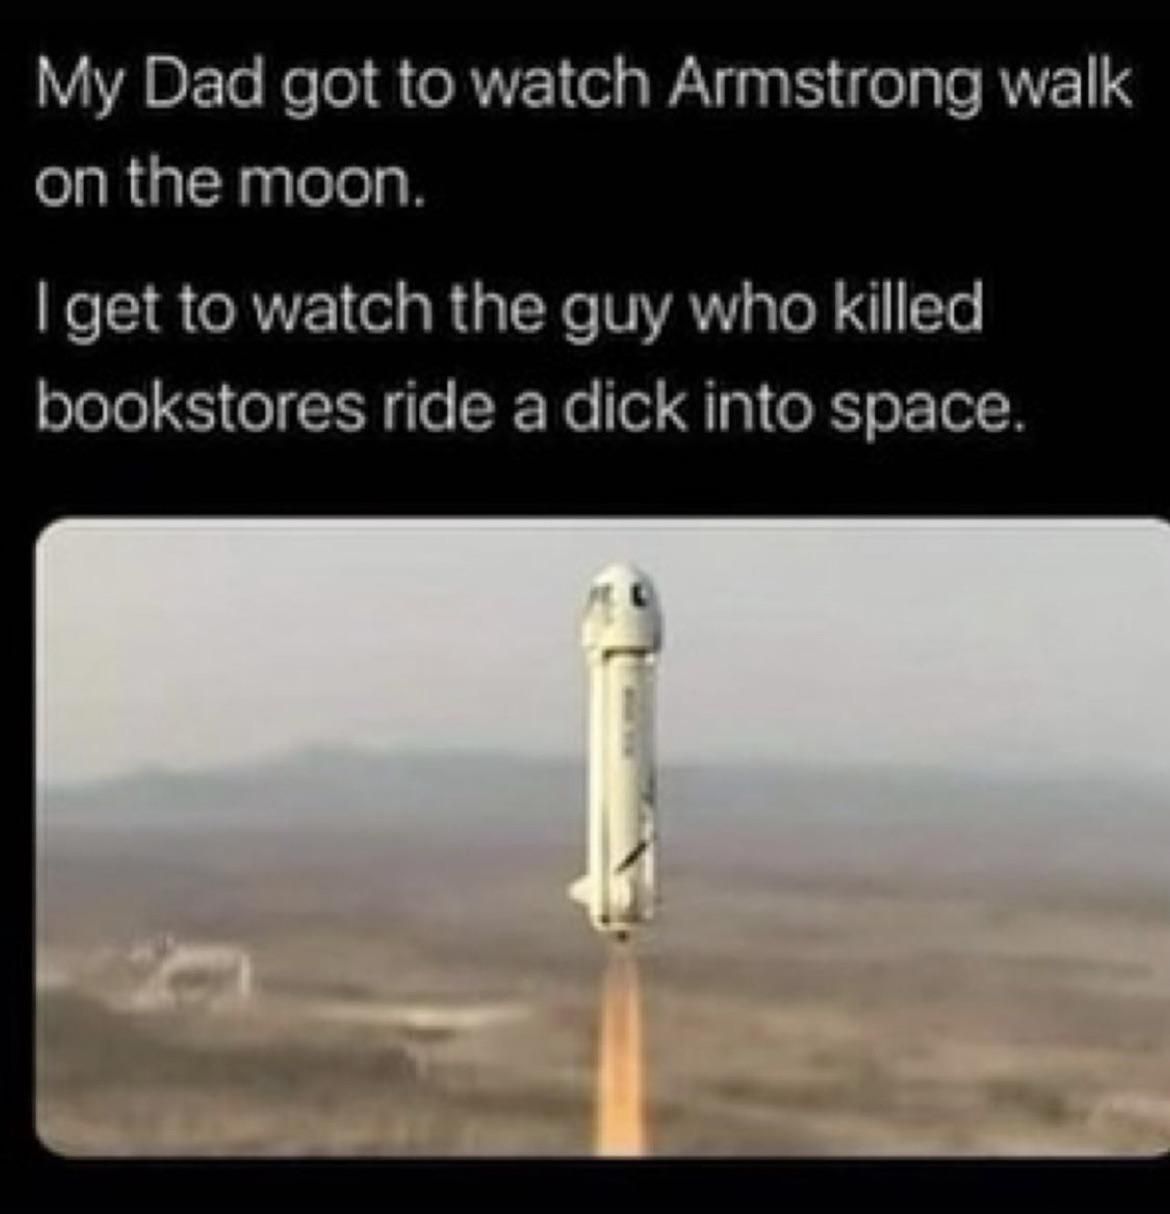 Dick rocket